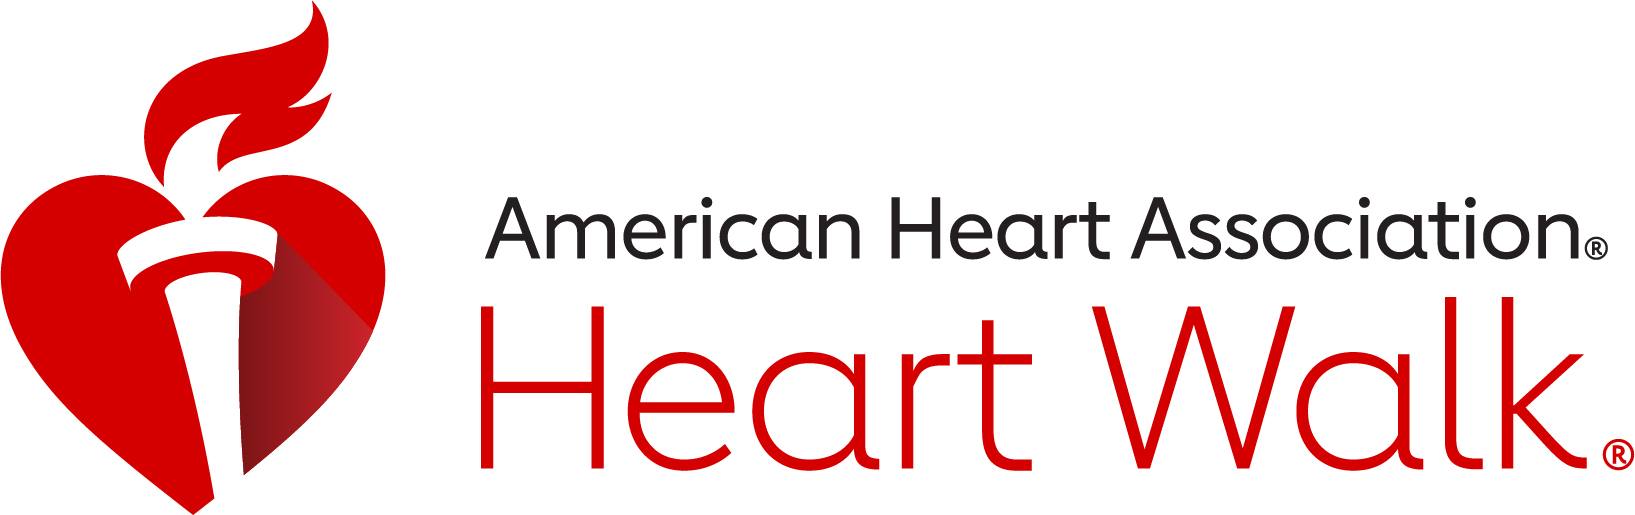 american heartwalk clipart